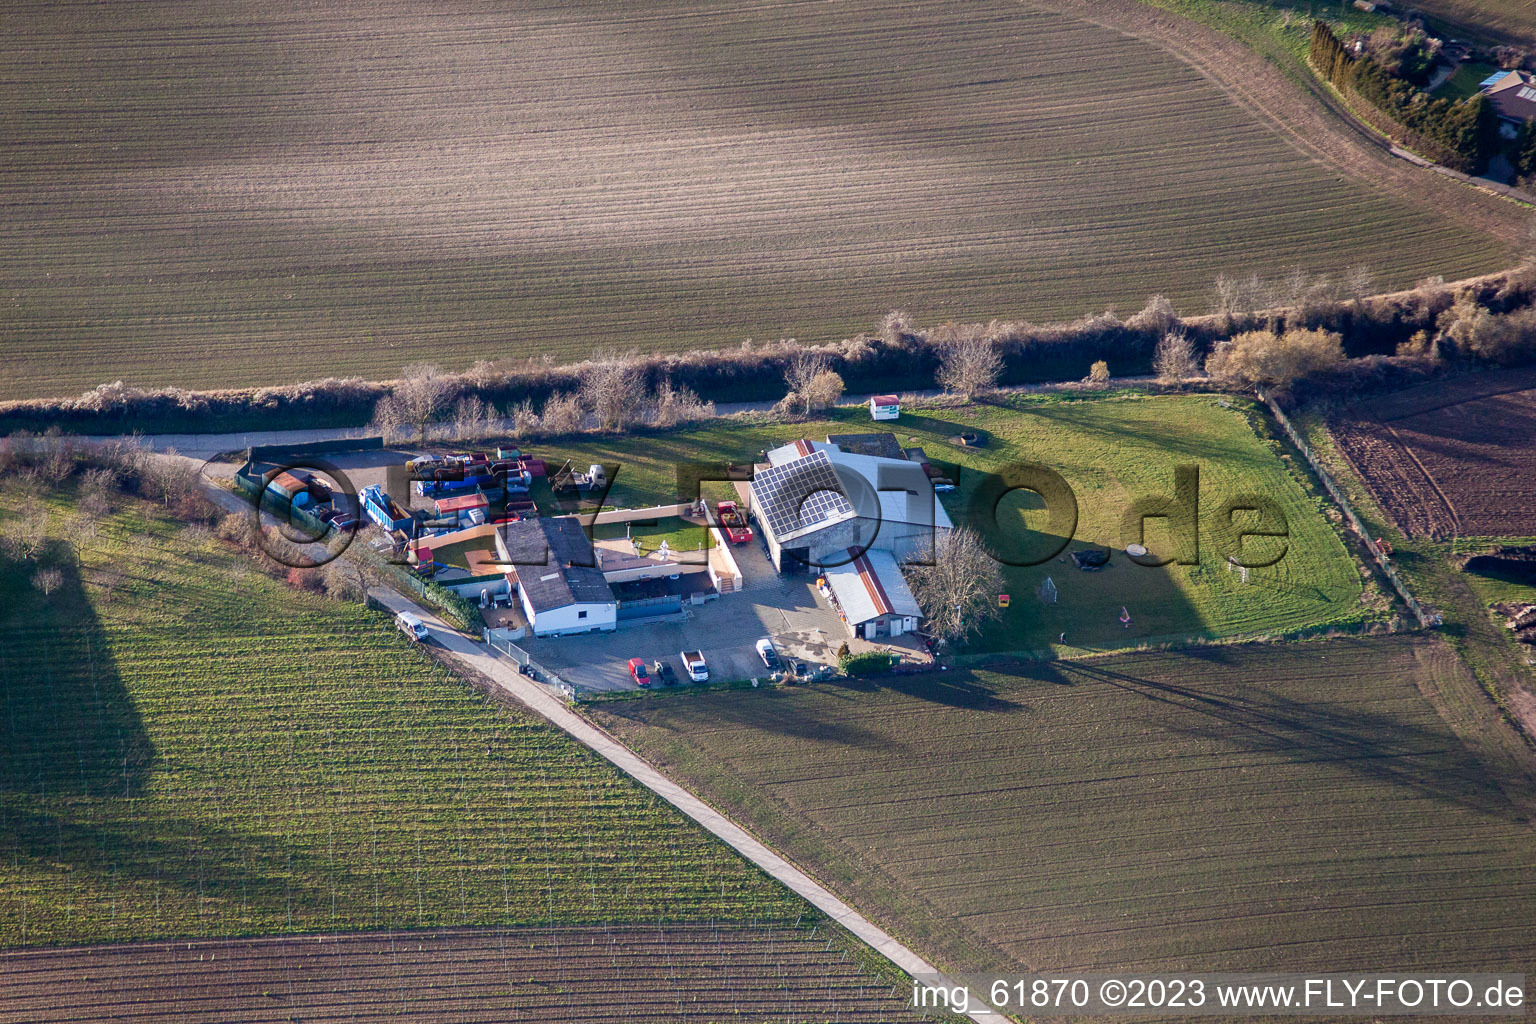 Drone image of District Ingenheim in Billigheim-Ingenheim in the state Rhineland-Palatinate, Germany